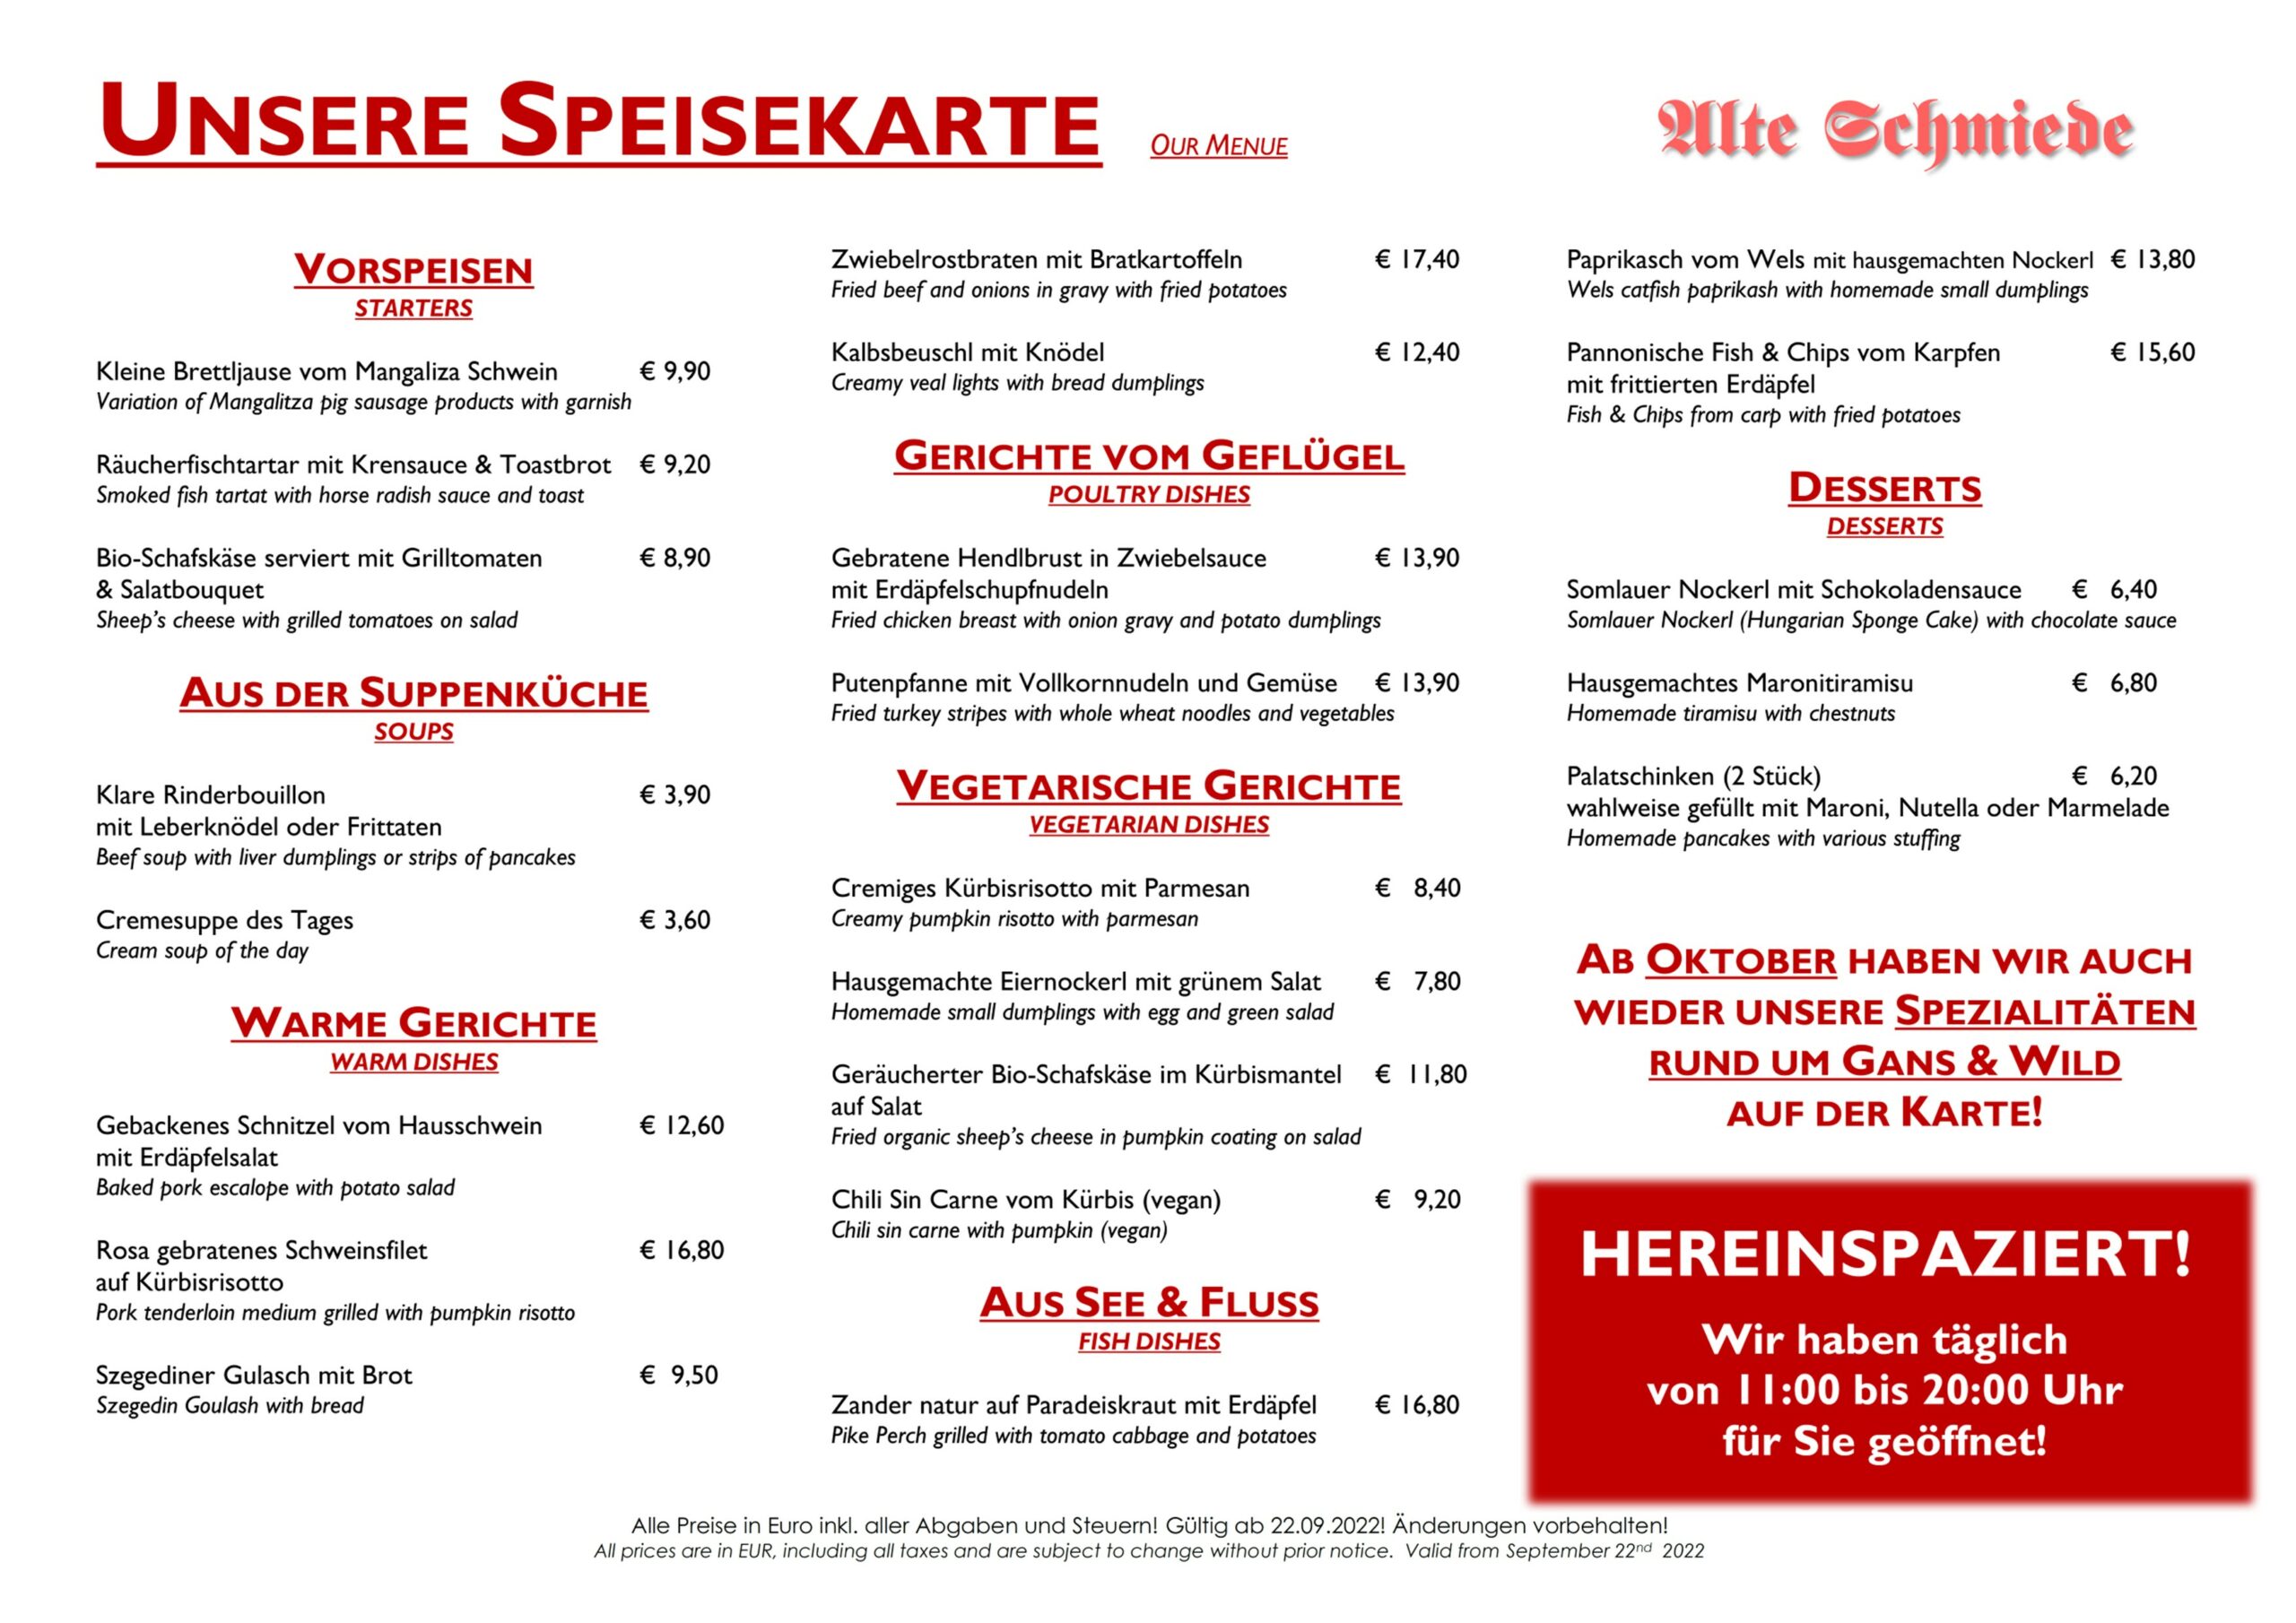 Speisekarte Restaurant Alte Schmiede Rust am Neusiedler See Fisch Fleisch vegetarisch vegan Herbst 2022 DRESCHER TOURISTIK DRescher LIne